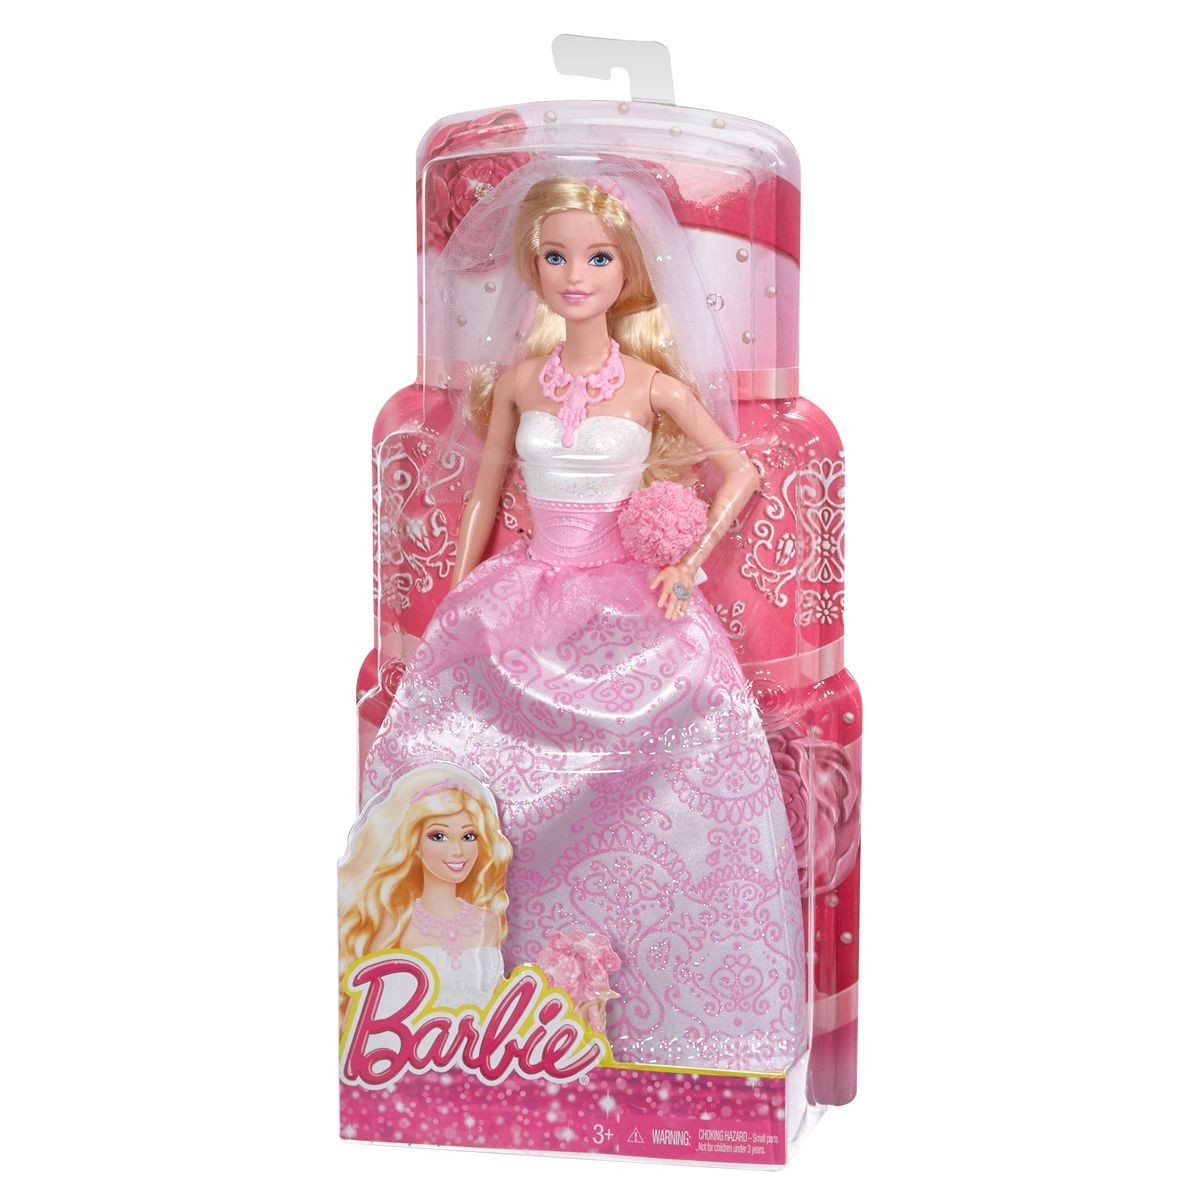 Déguisement Barbie Mariée Adulte